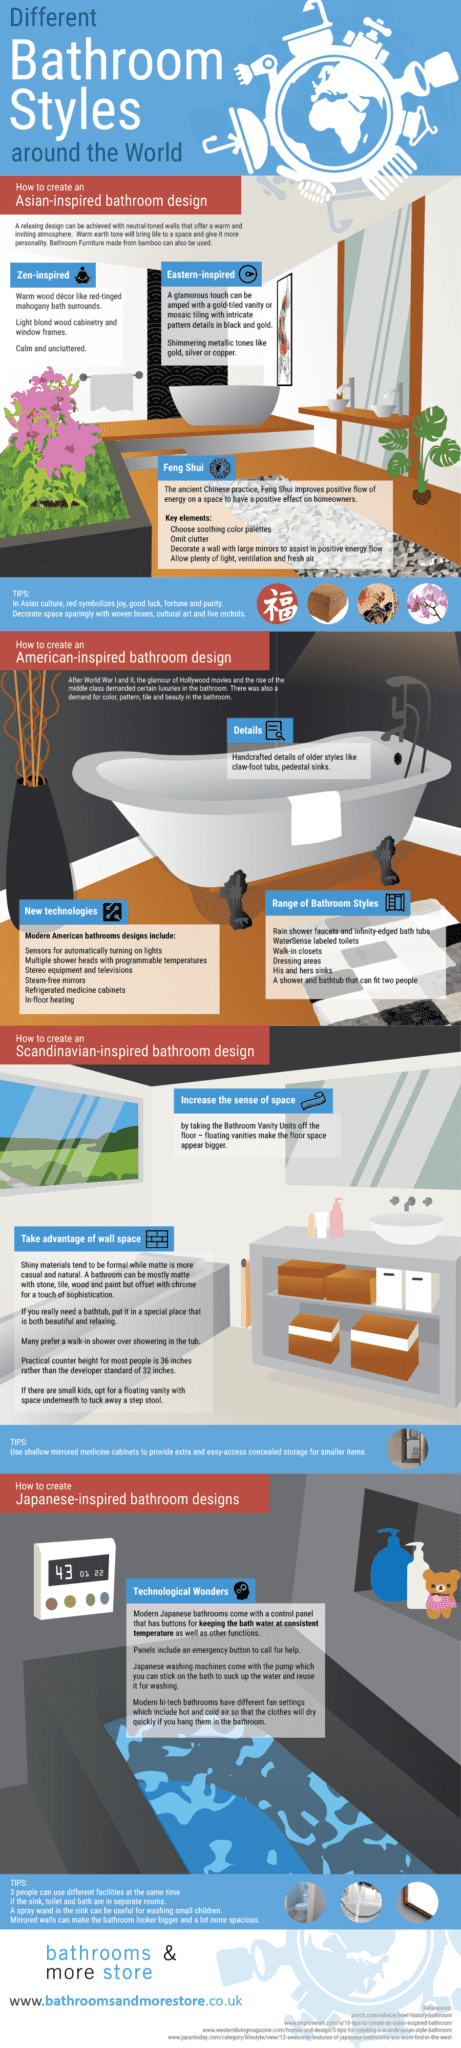 Bathroom Styles Around the World Infographic